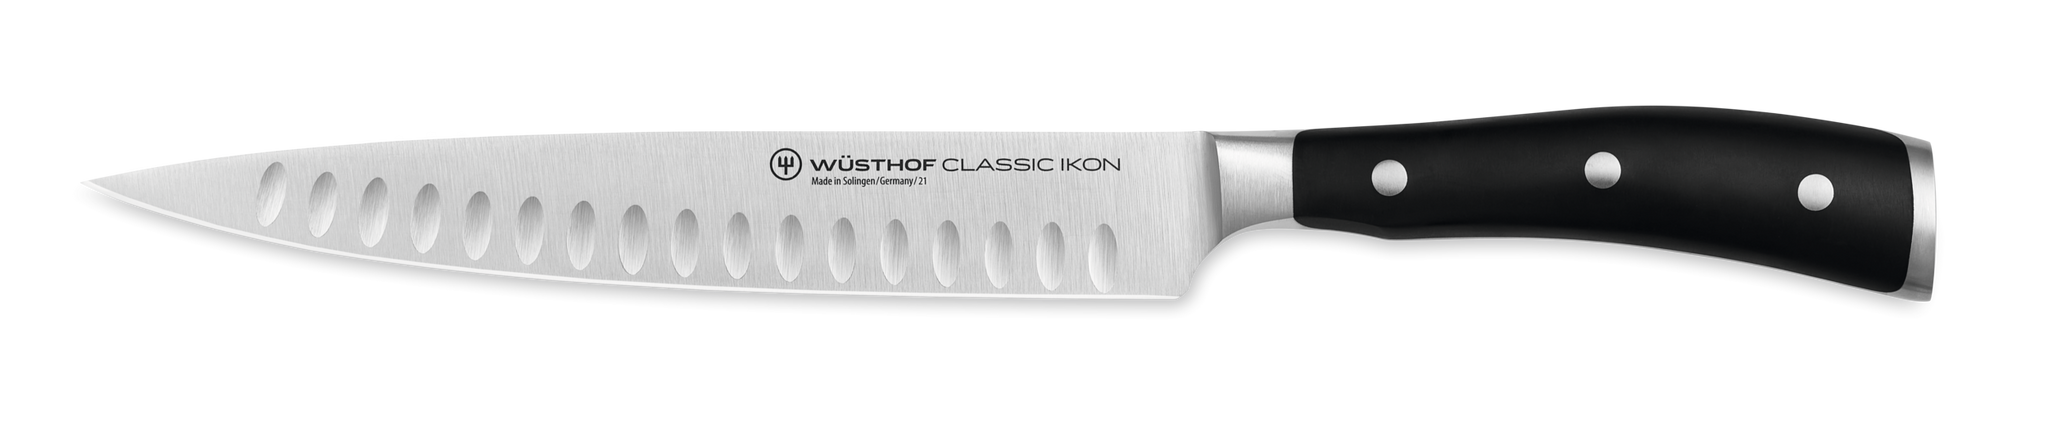 Classic Ikon 8" Hollow Edge Carving Knife